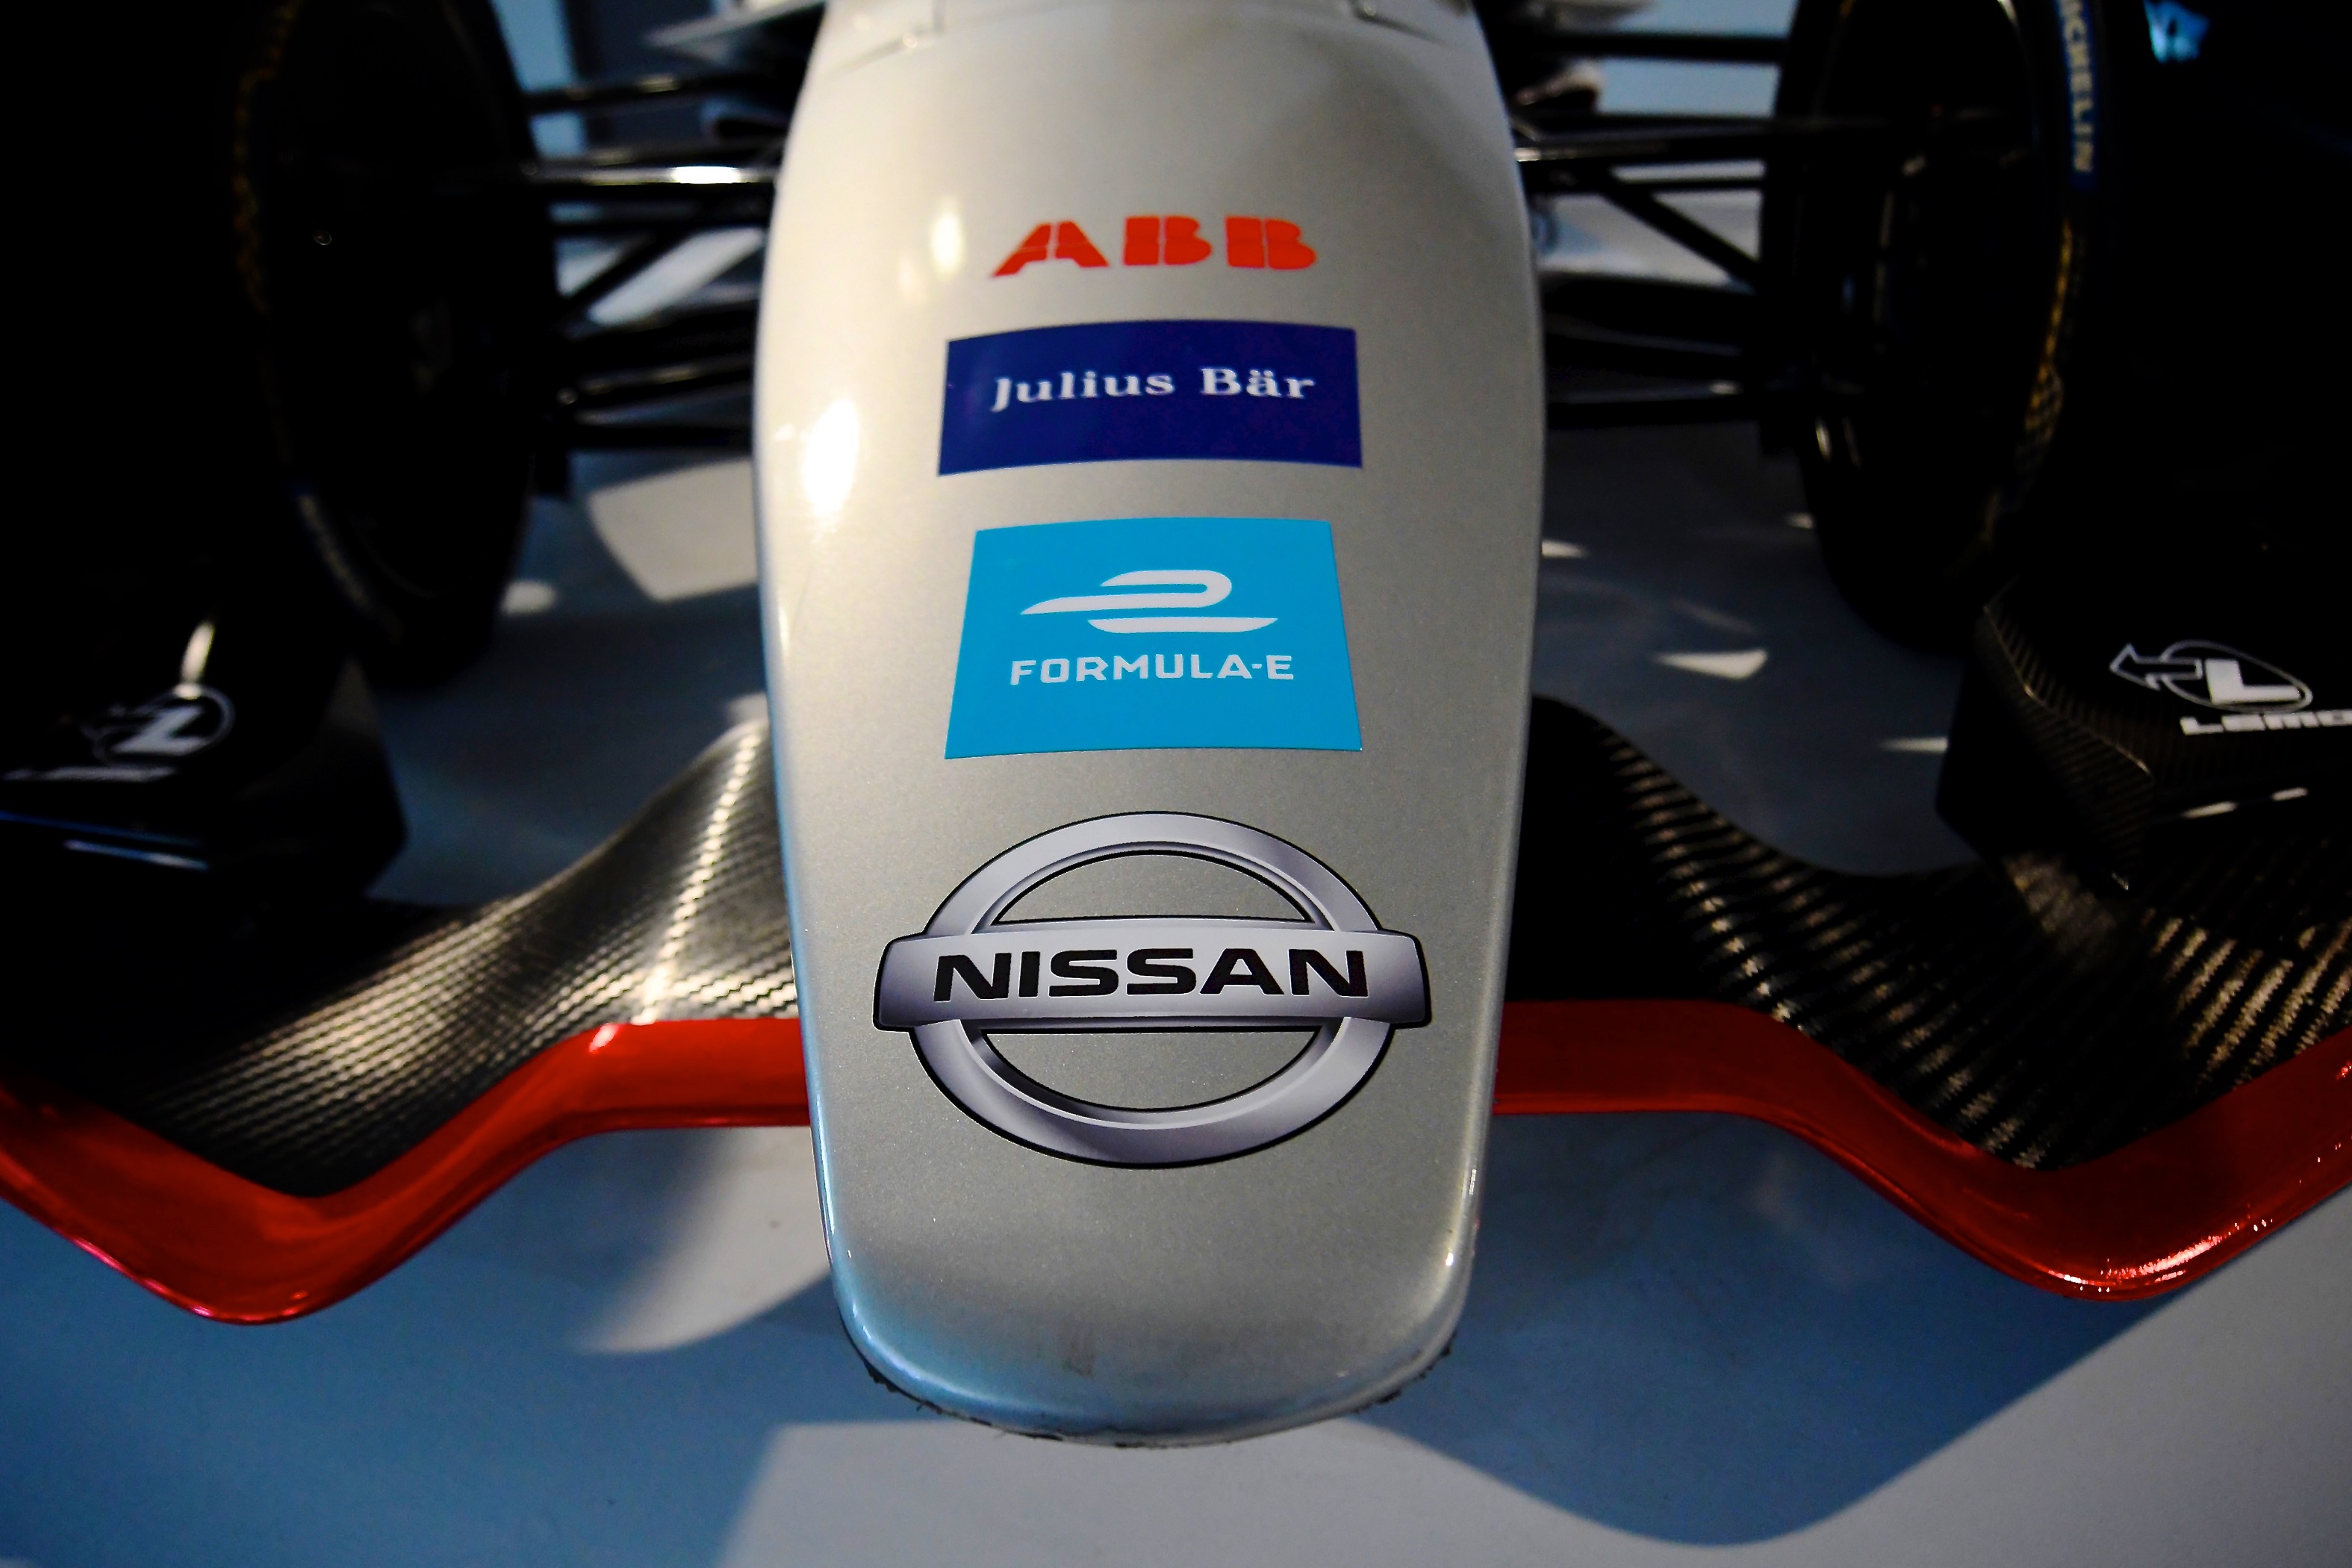 Nissan’s Formula E